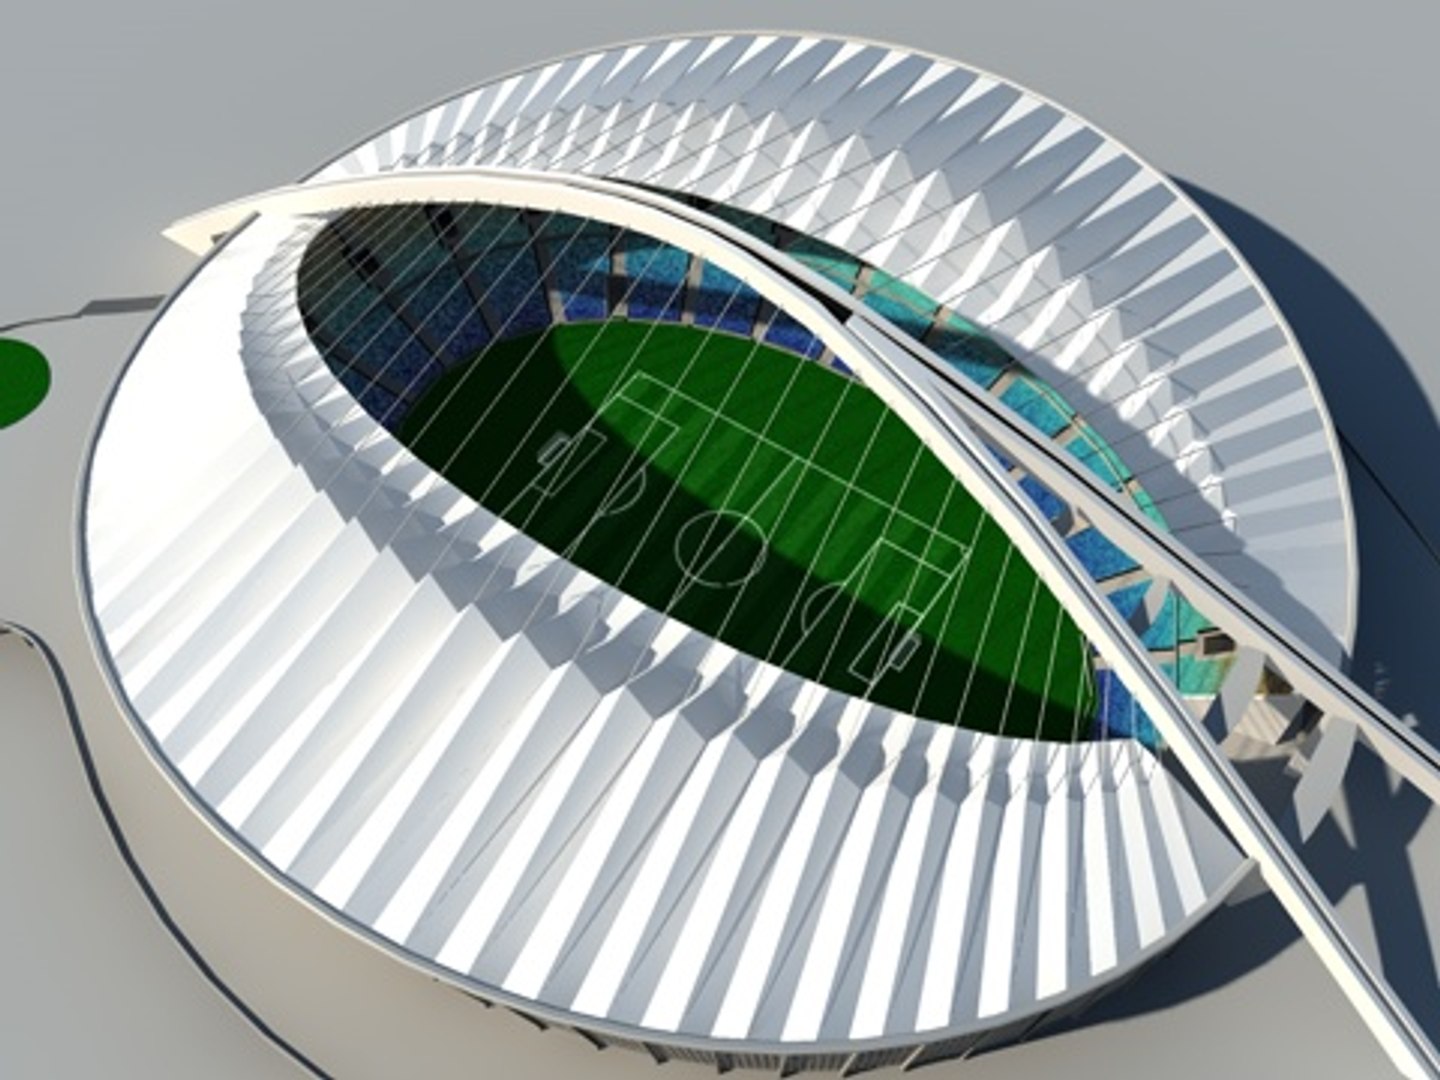 moses stadium durban 3d model https://p.turbosquid.com/ts-thumb/2W/K0r1NS/ZWWPQG1Z/durban_stadium3/jpg/1280061999/1920x1080/fit_q87/dce8519452b0584241d292563332b353c5cb819e/durban_stadium3.jpg